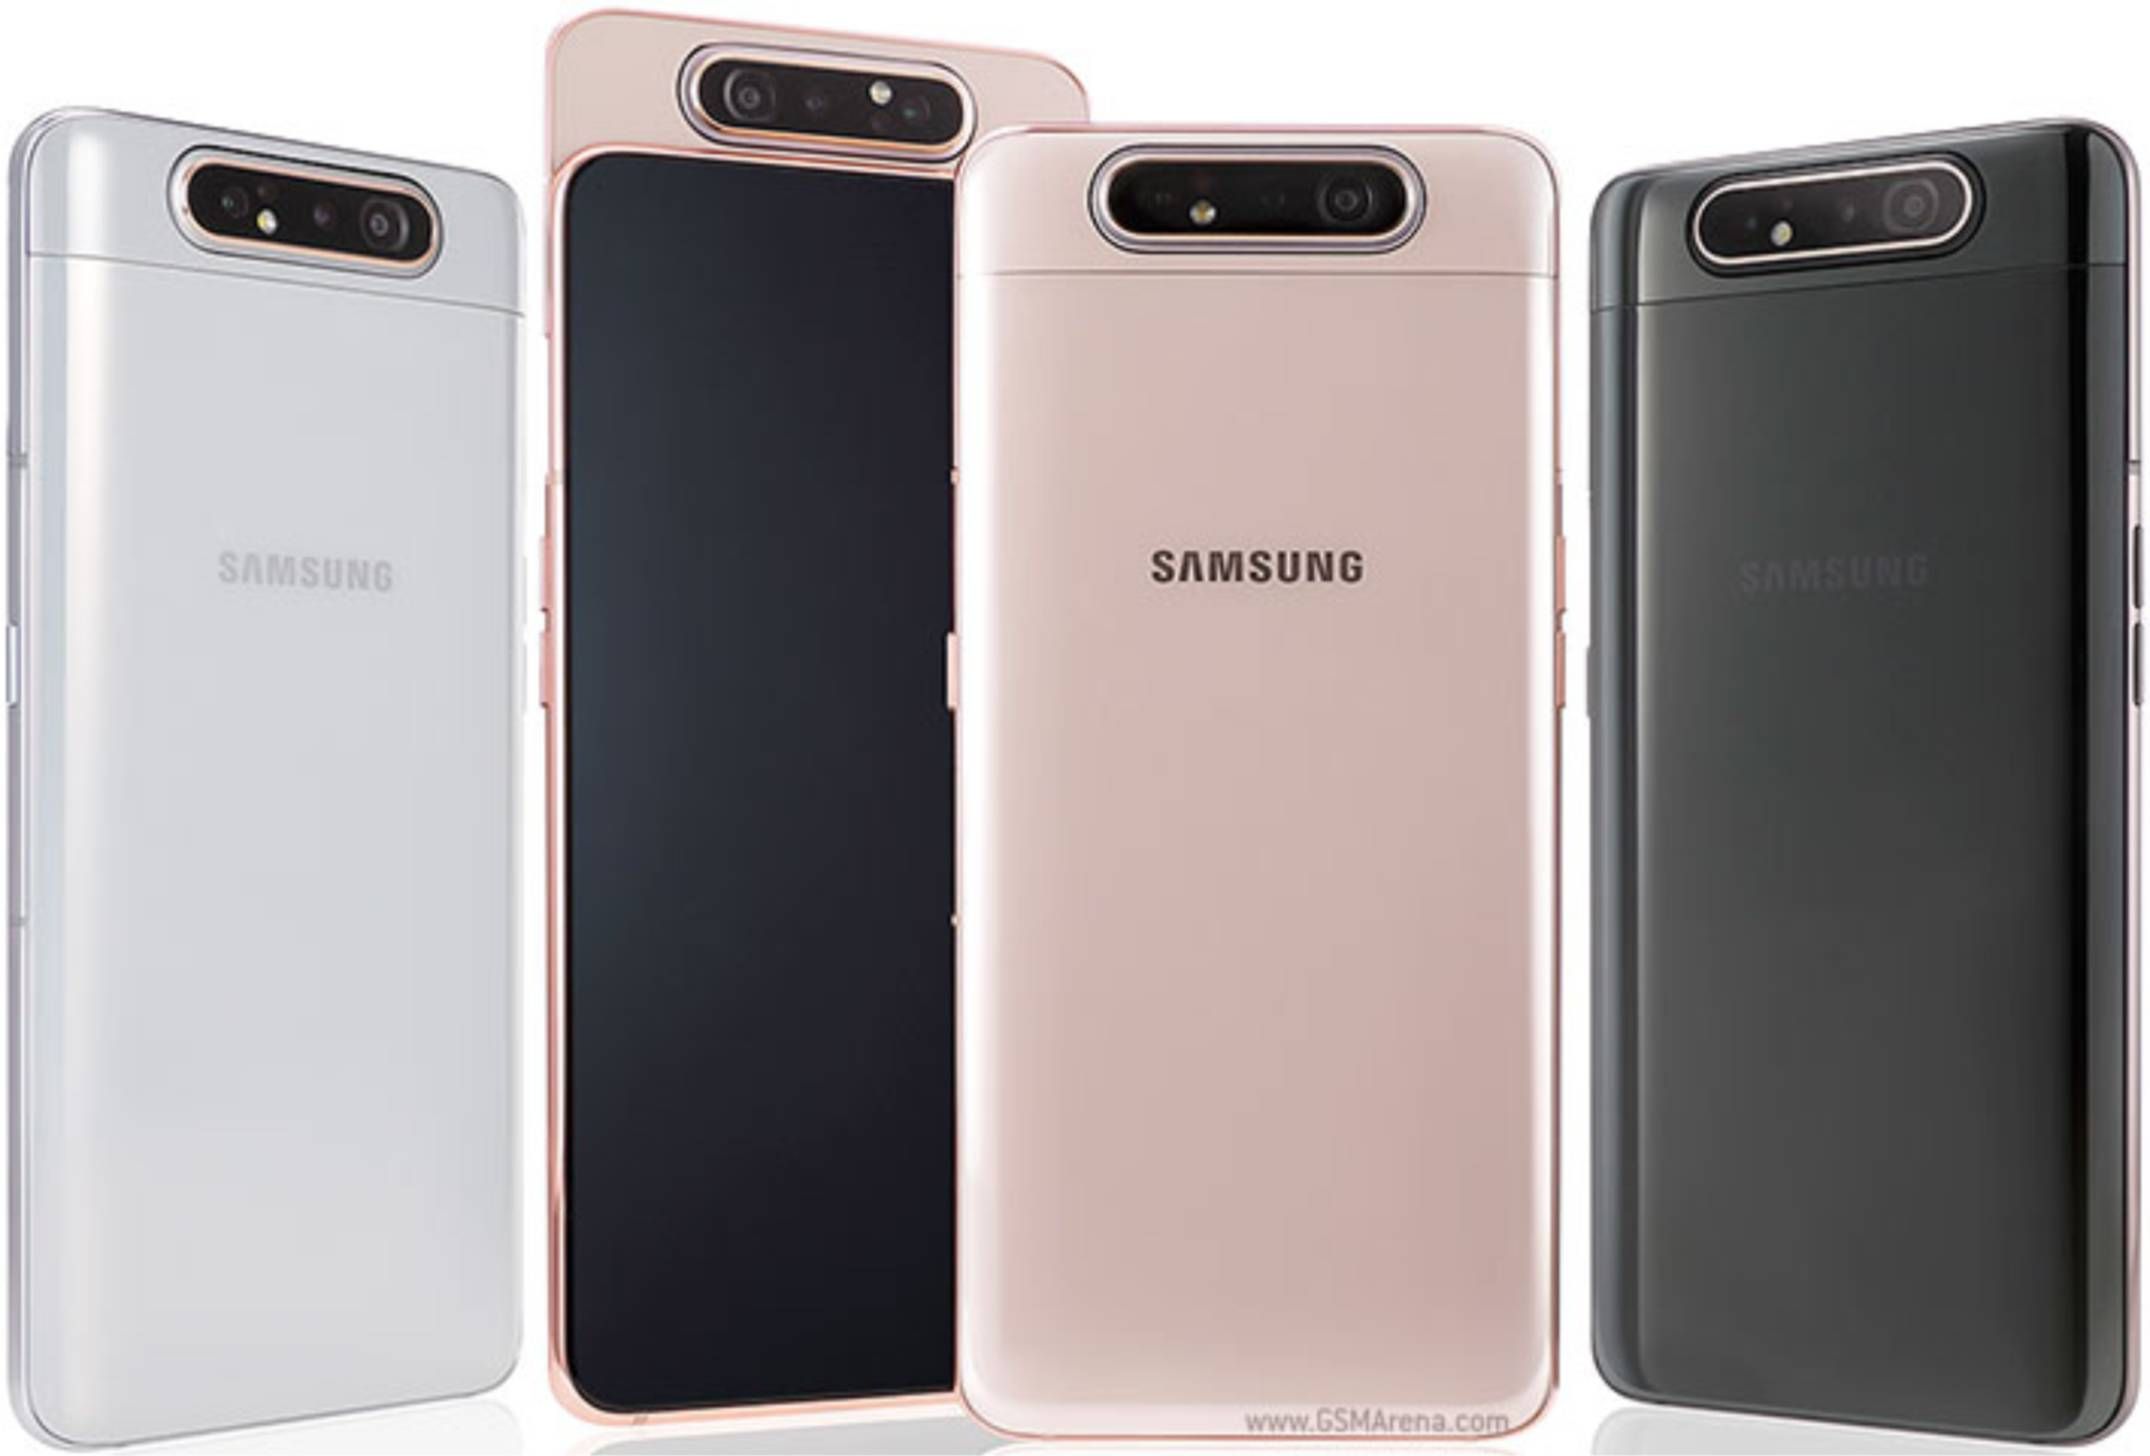 Samsung Galaxy A80 Specifications and Price in Kiambu